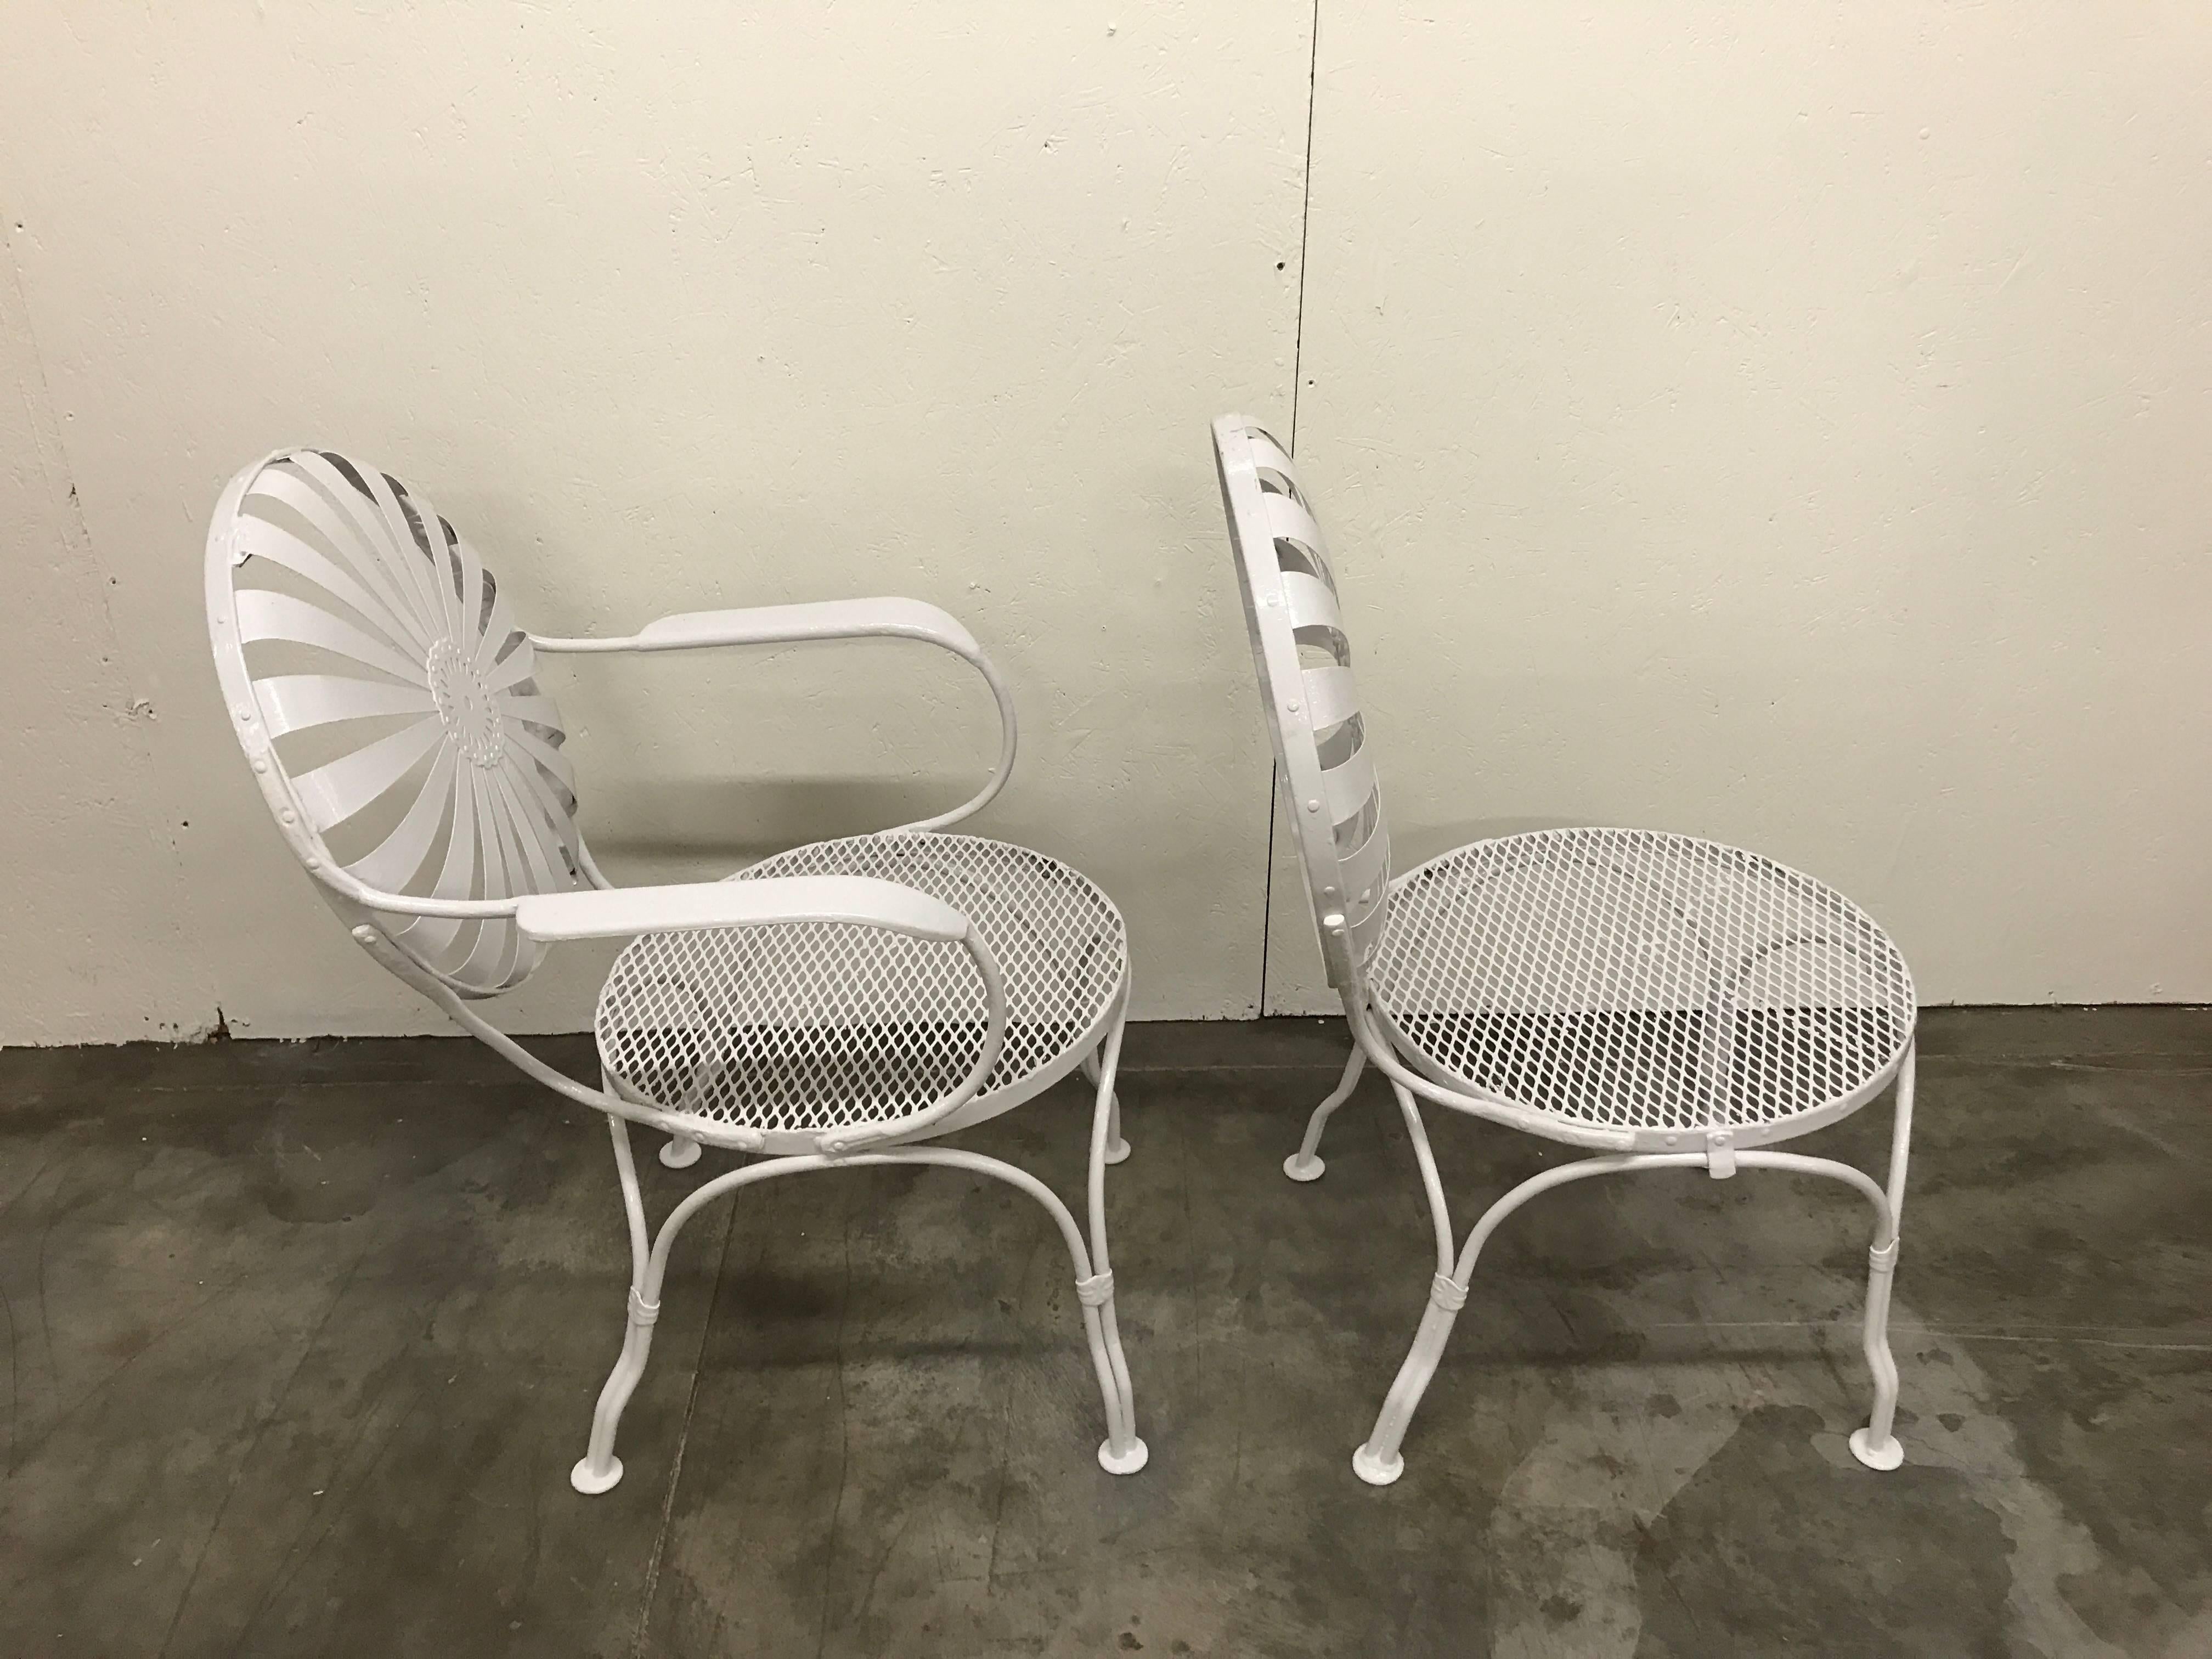 sunburst chairs